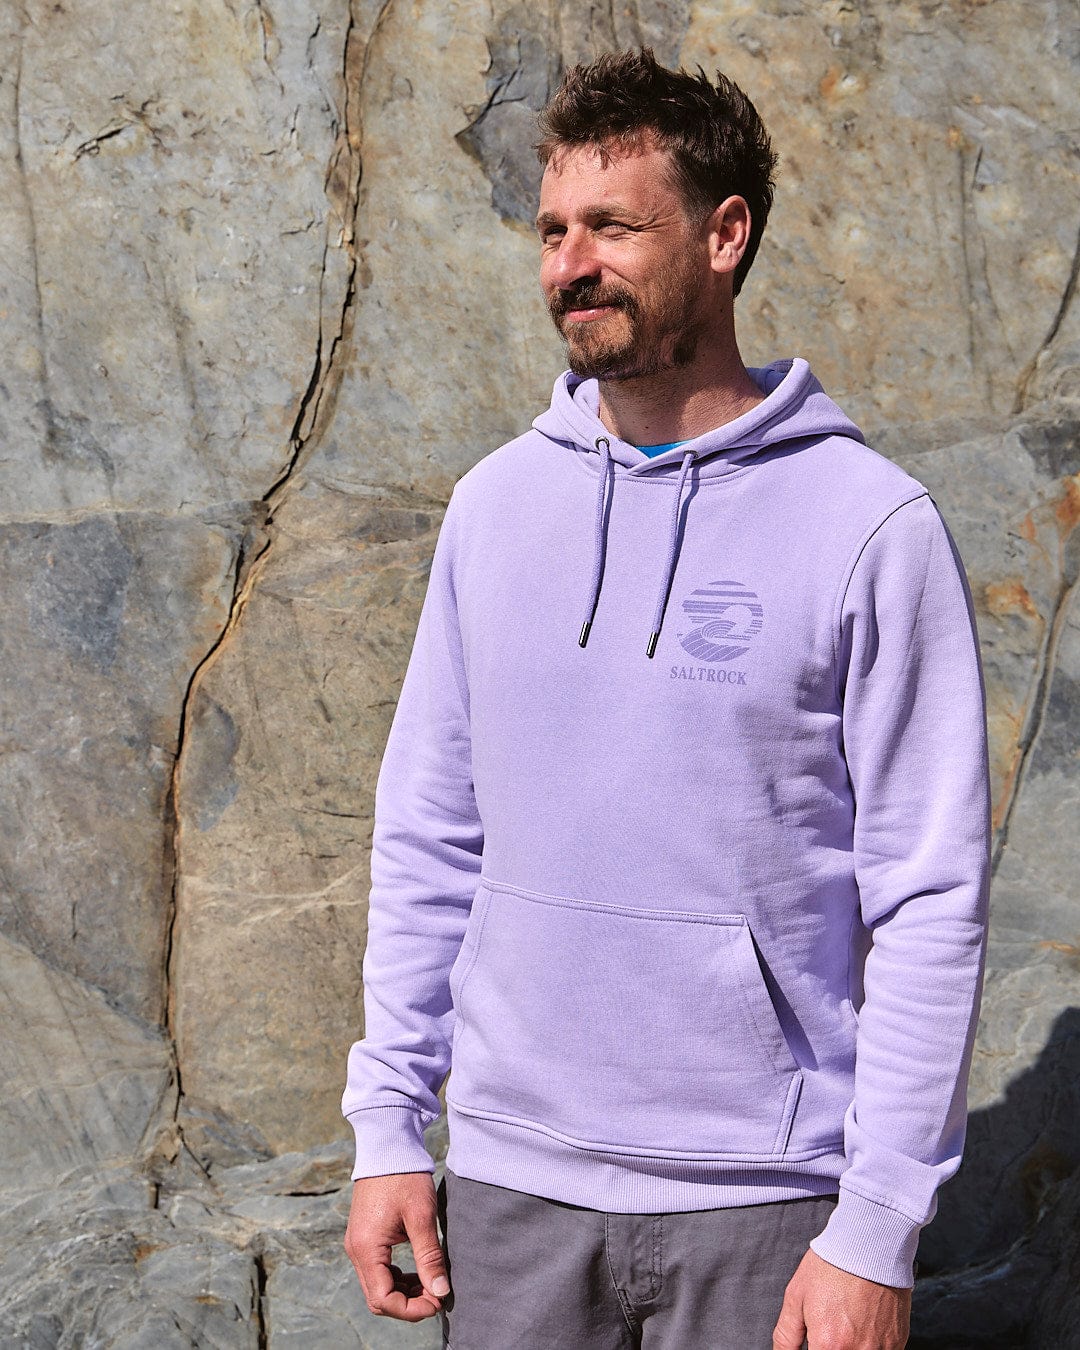 A man wearing a Saltrock Atlantic - Men's Pop Hoodie - Purple standing next to a rock wall.